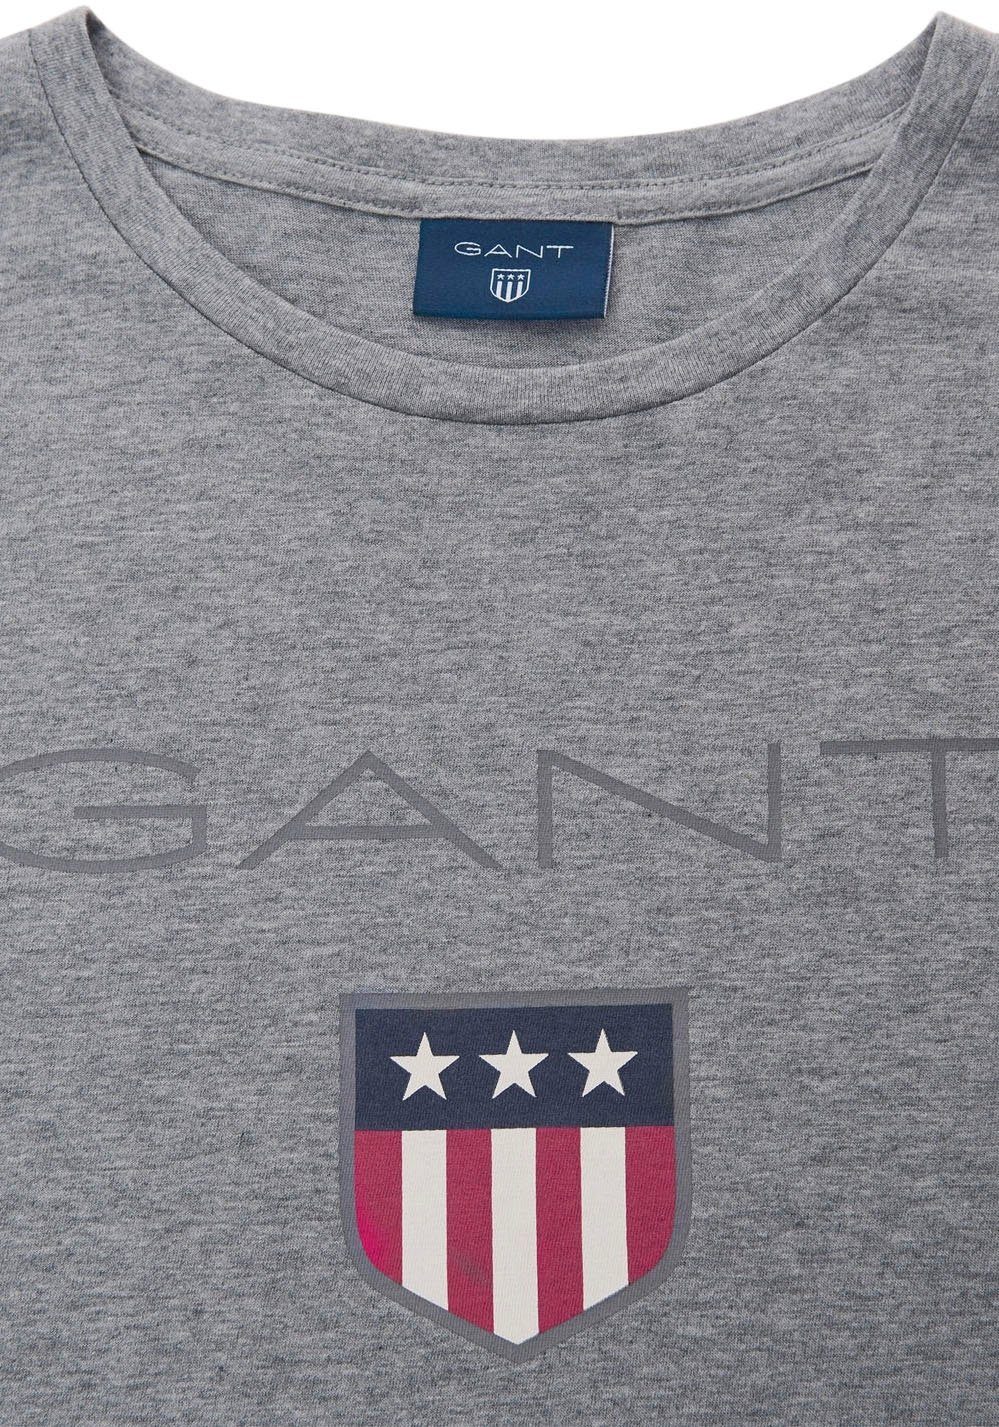 SHIELD T-Shirt Gant melange grey Markendruck Großer